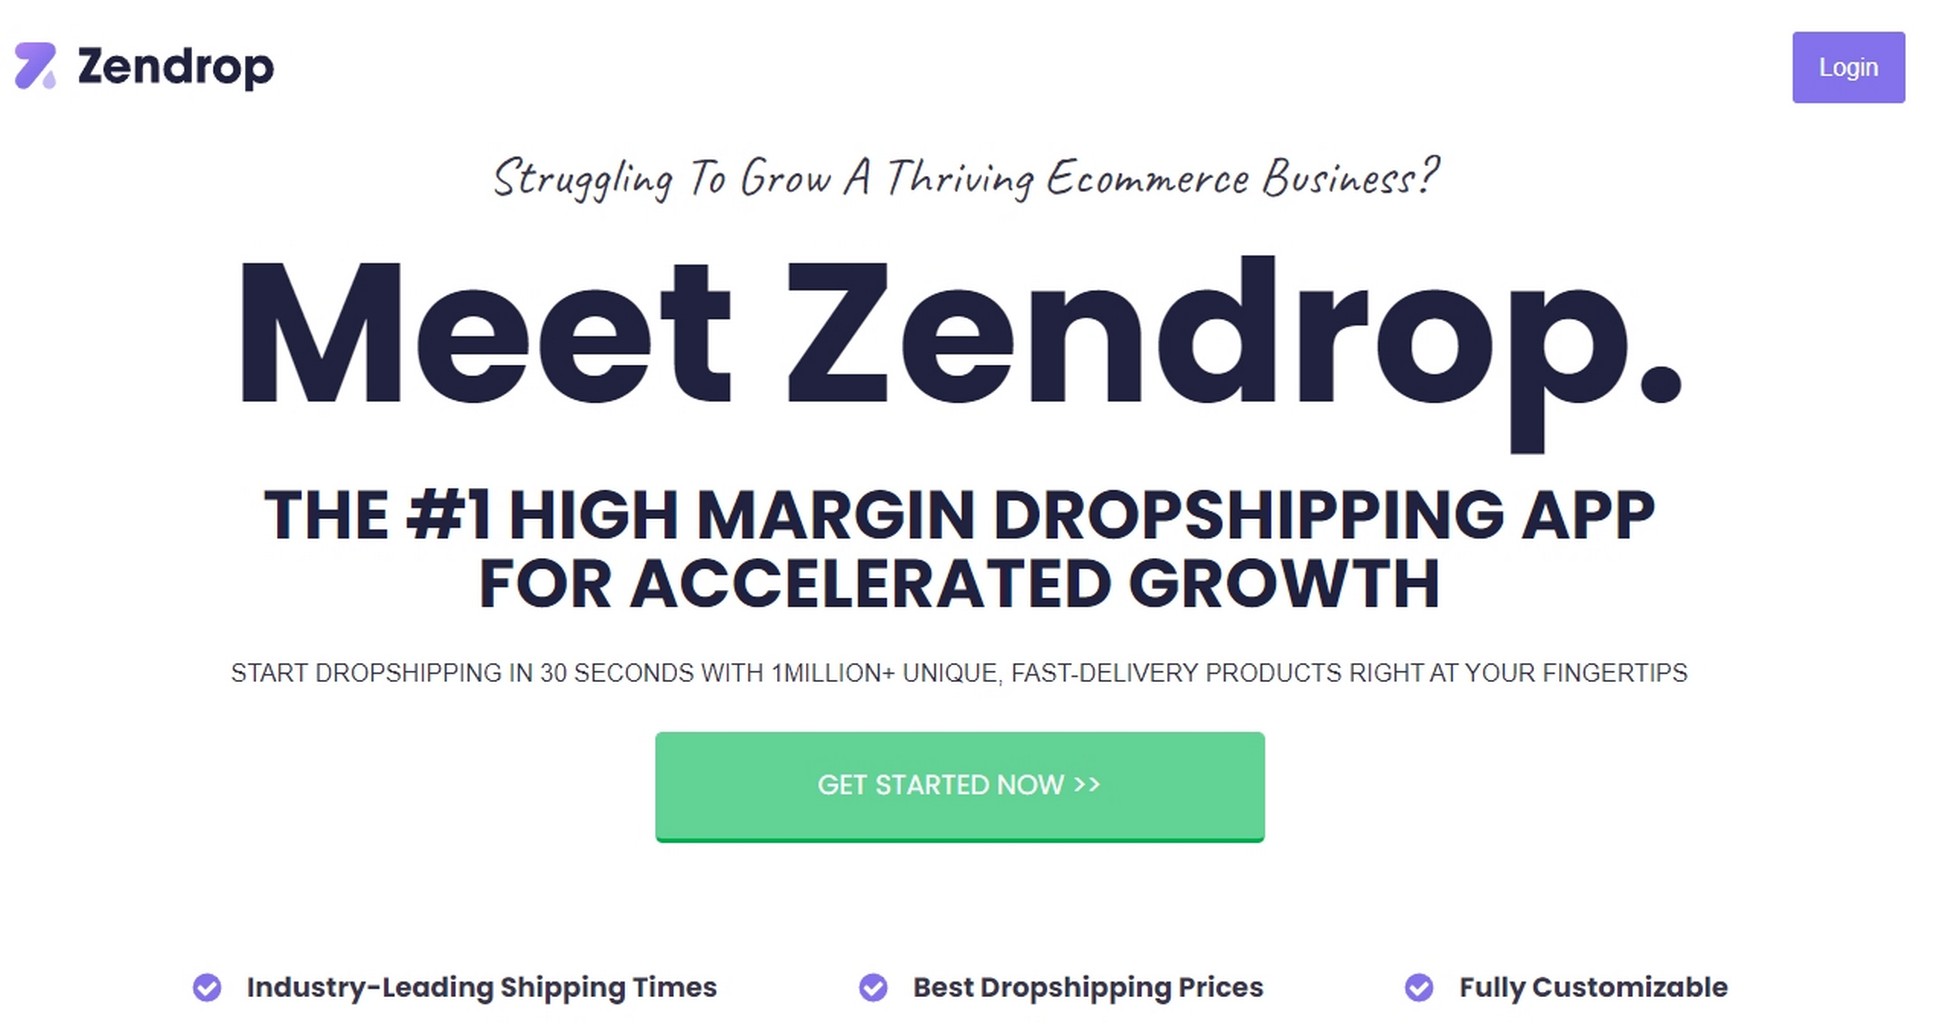 Zendrop dropshipping